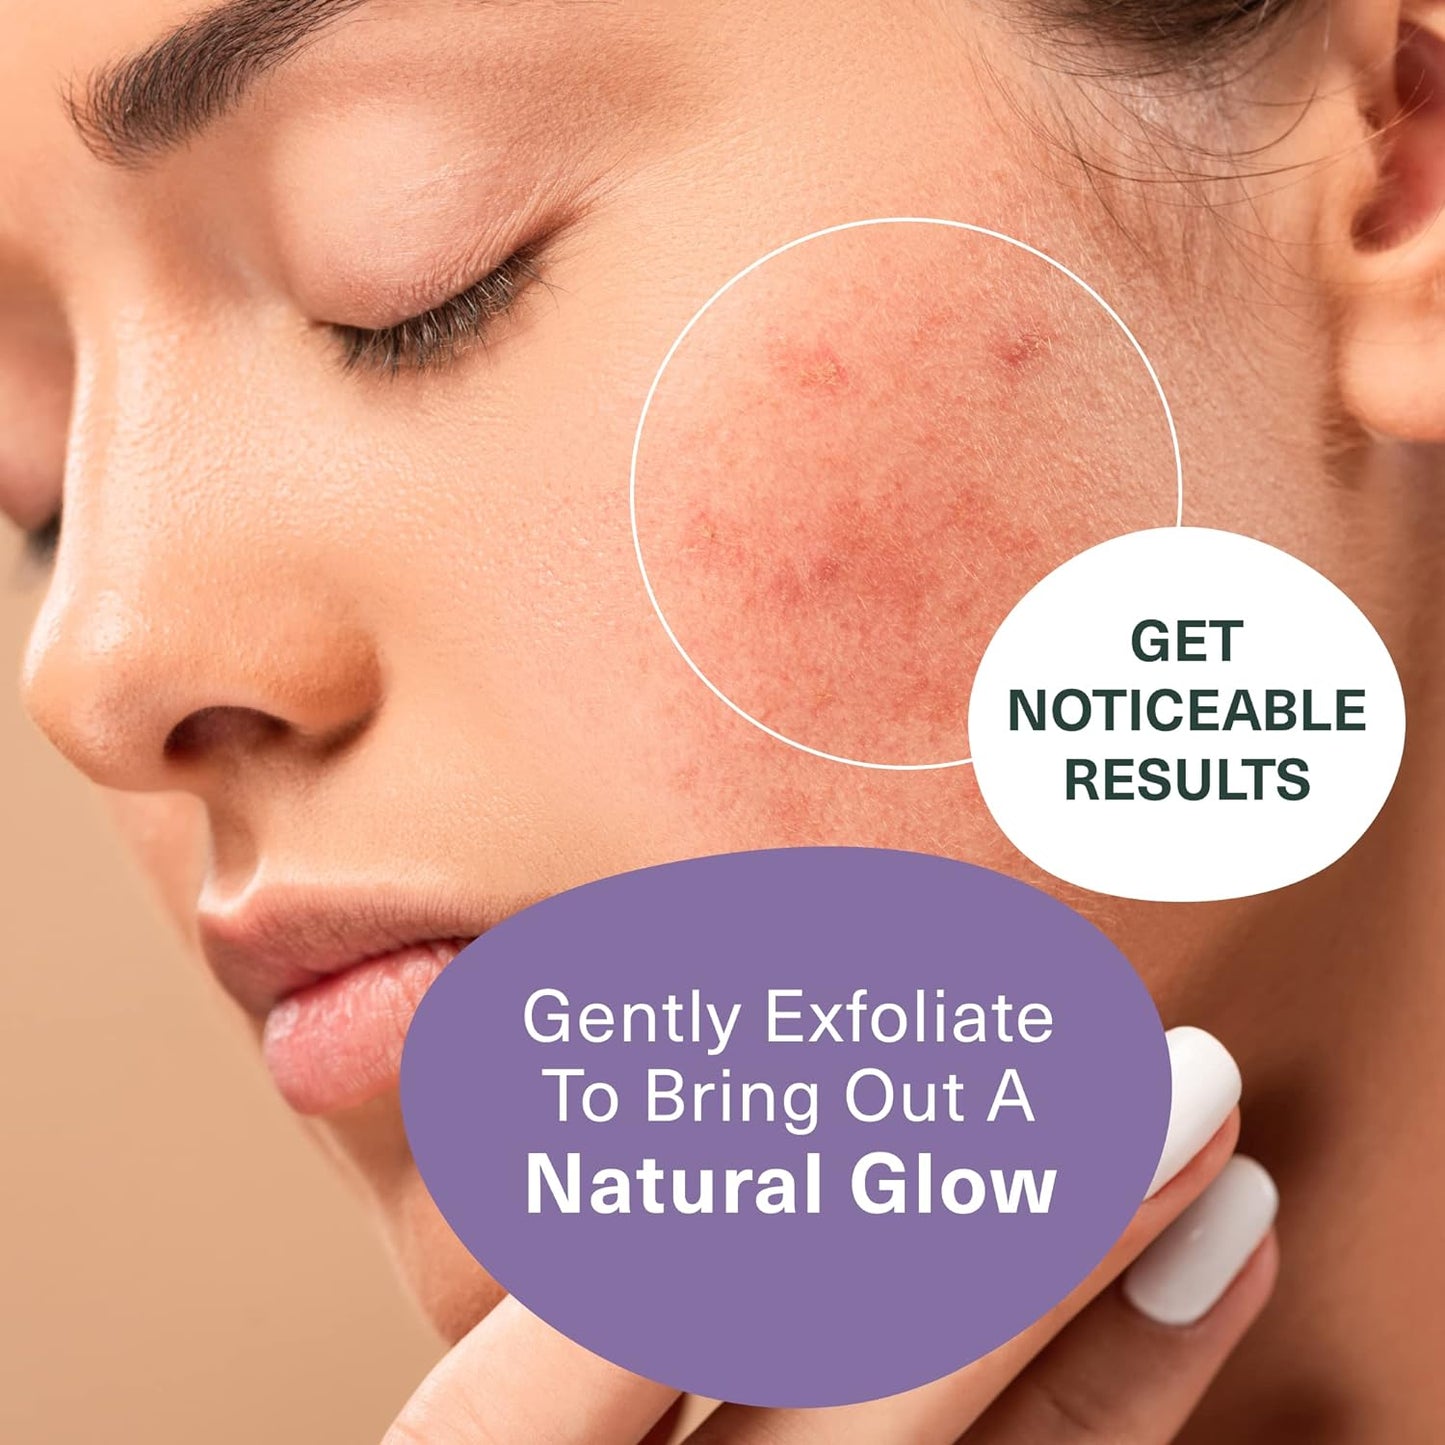 Bakuchiol & Glycolic Acid Exfoliating Face Wash for Sensitive Skin